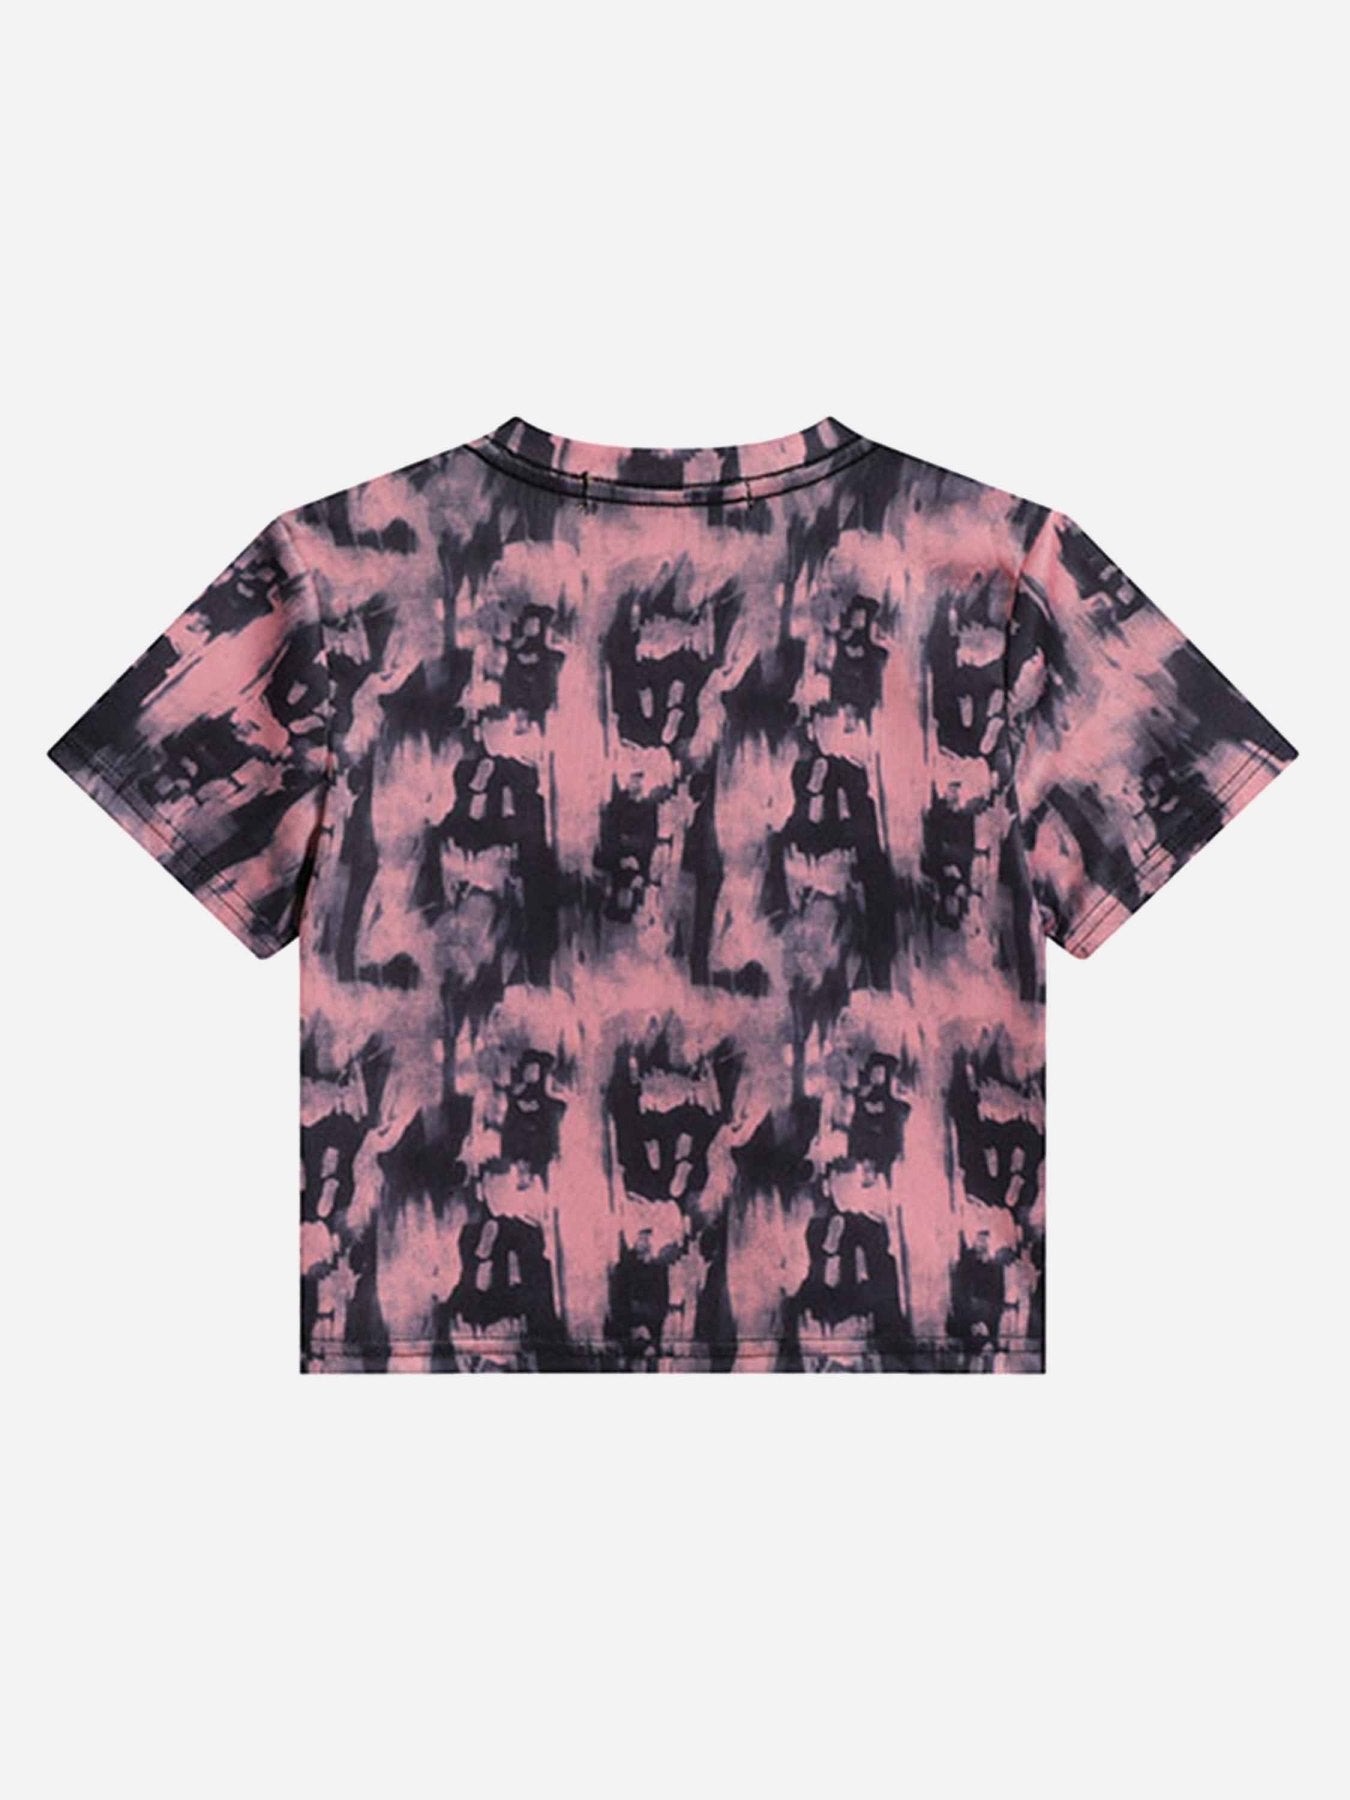 Sneakerland Tie-dye Gradient Print Women's T-shirt SP230524R49W